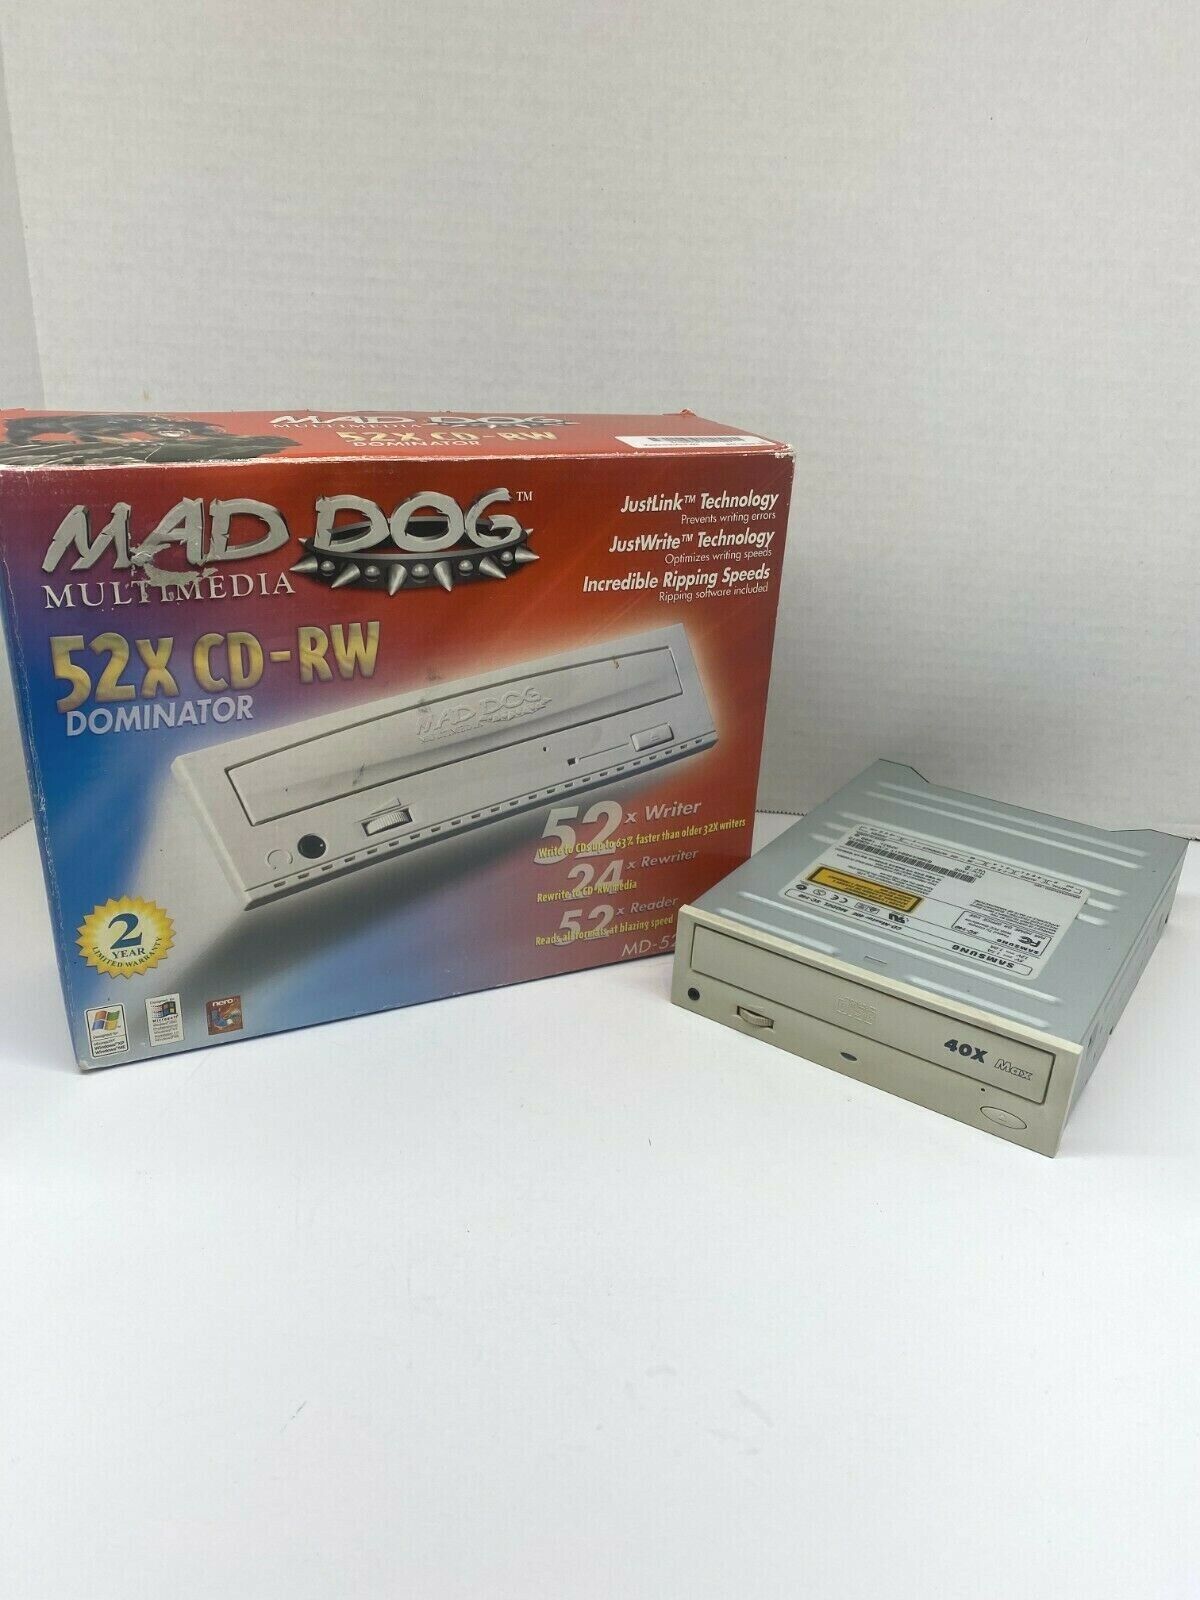 Mad Dog Multimedia 52X24X52 CD-RW Dominator MD-52XCDR Electronics Technology 